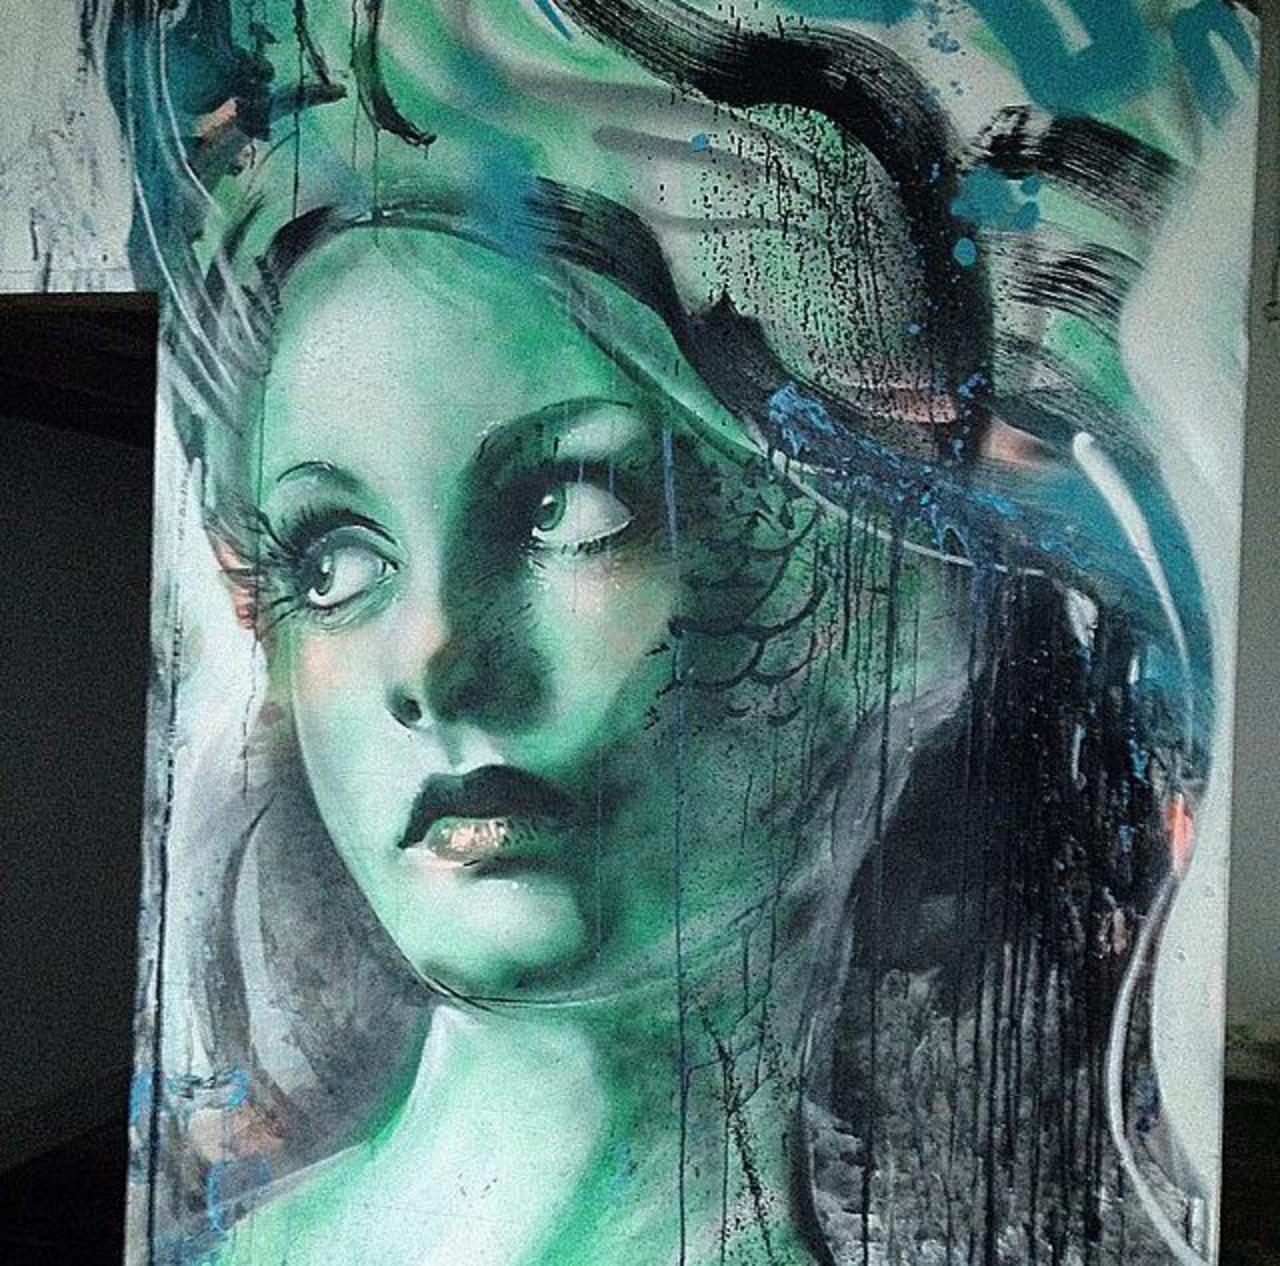 Street Art portrait by Thia Govaldi 

#art #arte #graffiti #streetart http://t.co/3RAN9pCKrm